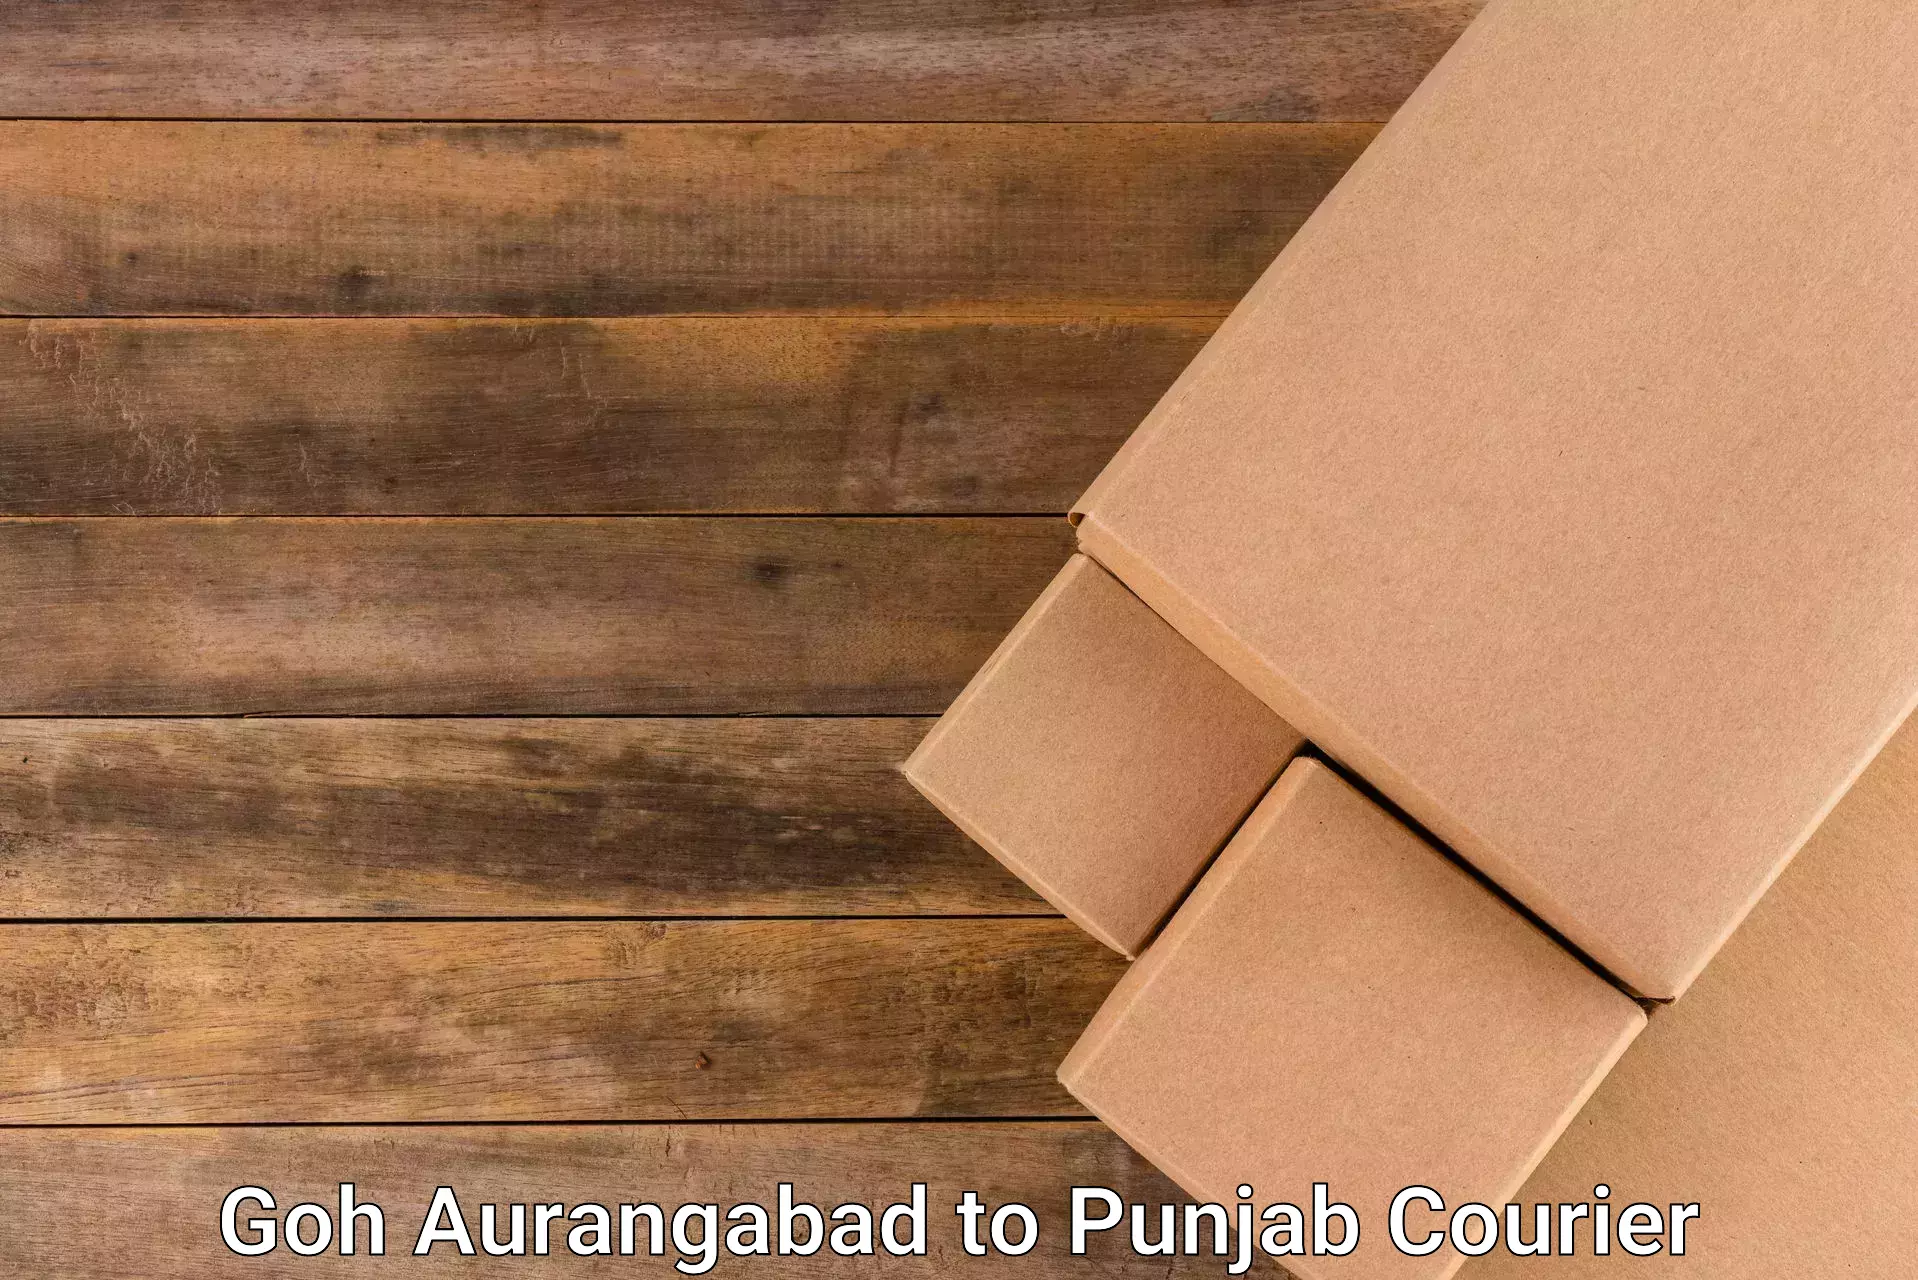 Tailored delivery services Goh Aurangabad to Punjab